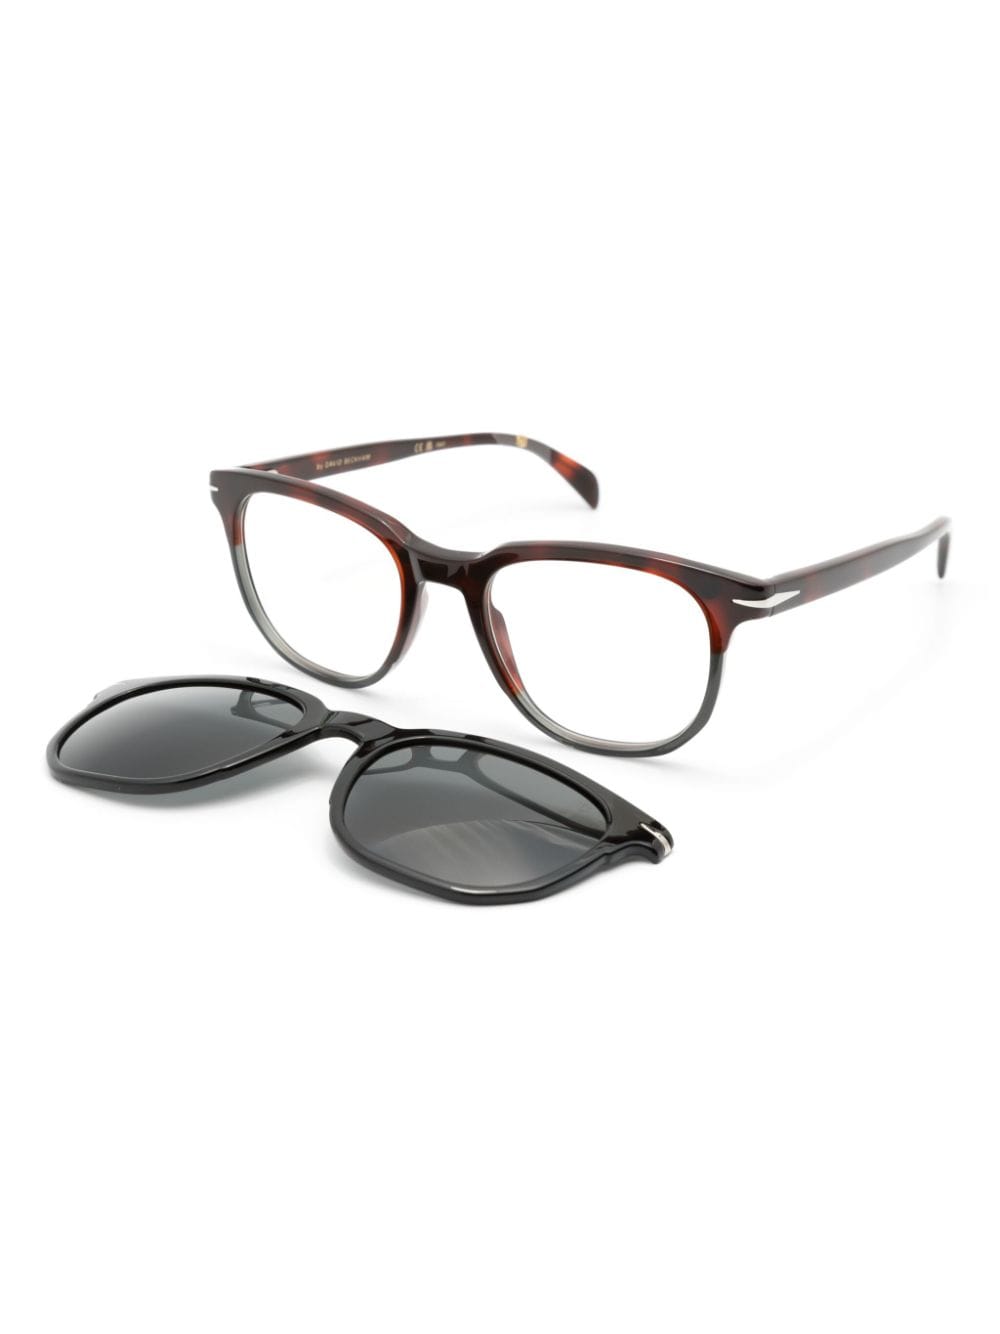 Eyewear by David Beckham 7120 square-frame glasses - Bruin